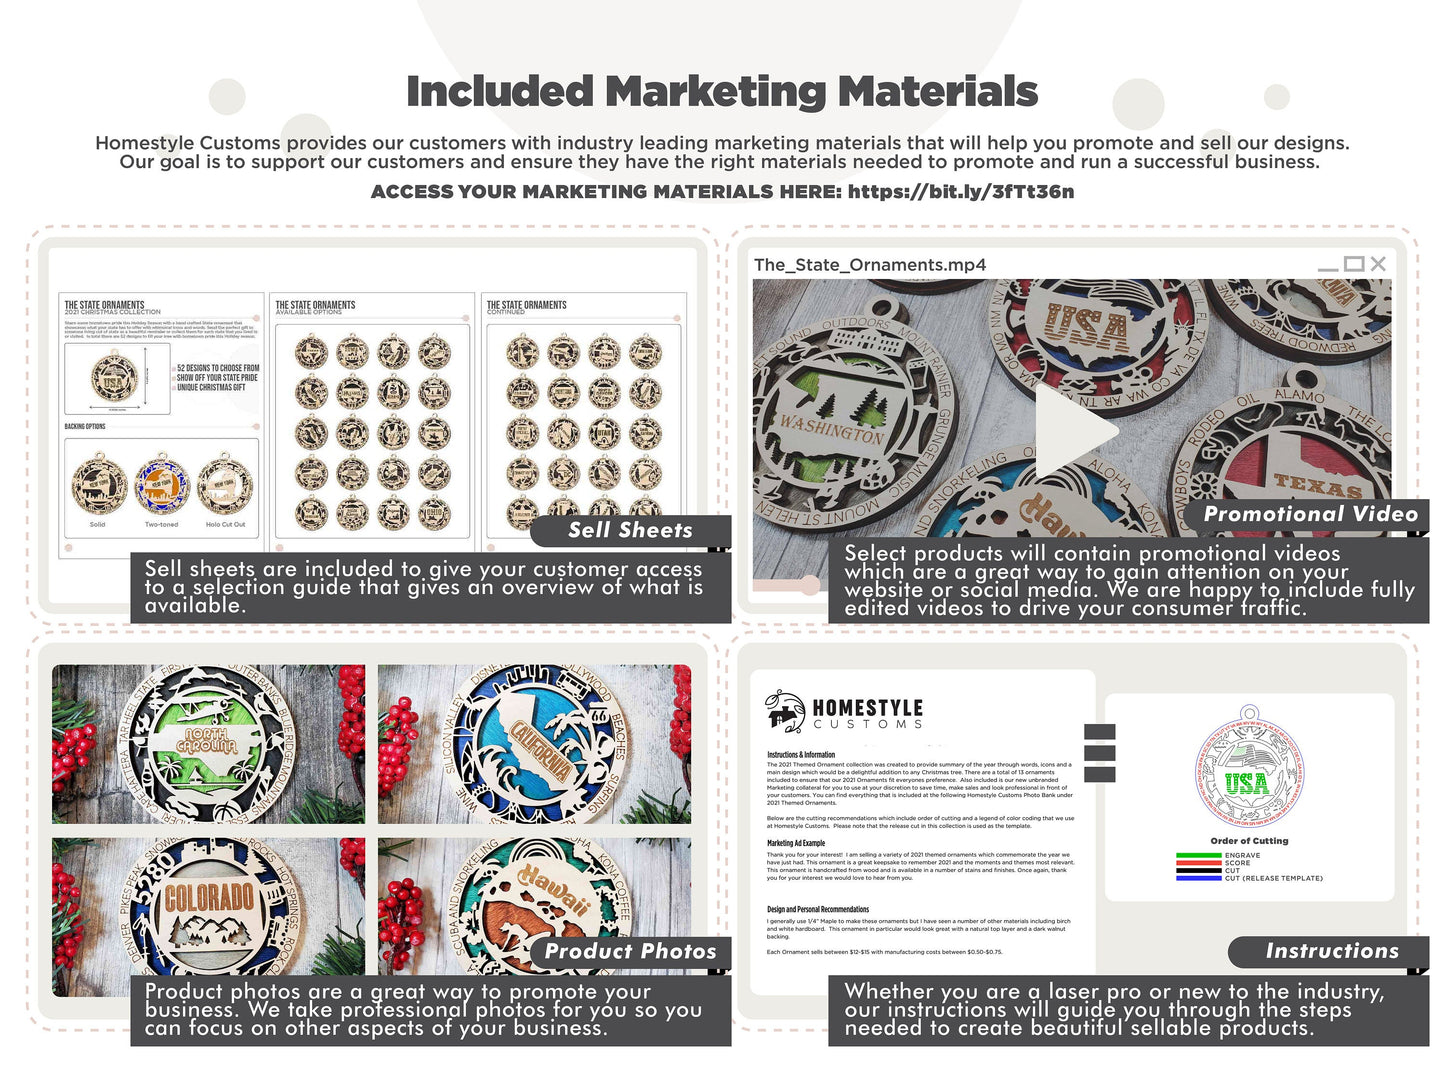 Military Mega Ornament Bundle - 112 Unique designs - SVG, PDF, AI File Download - Sized for Glowforge